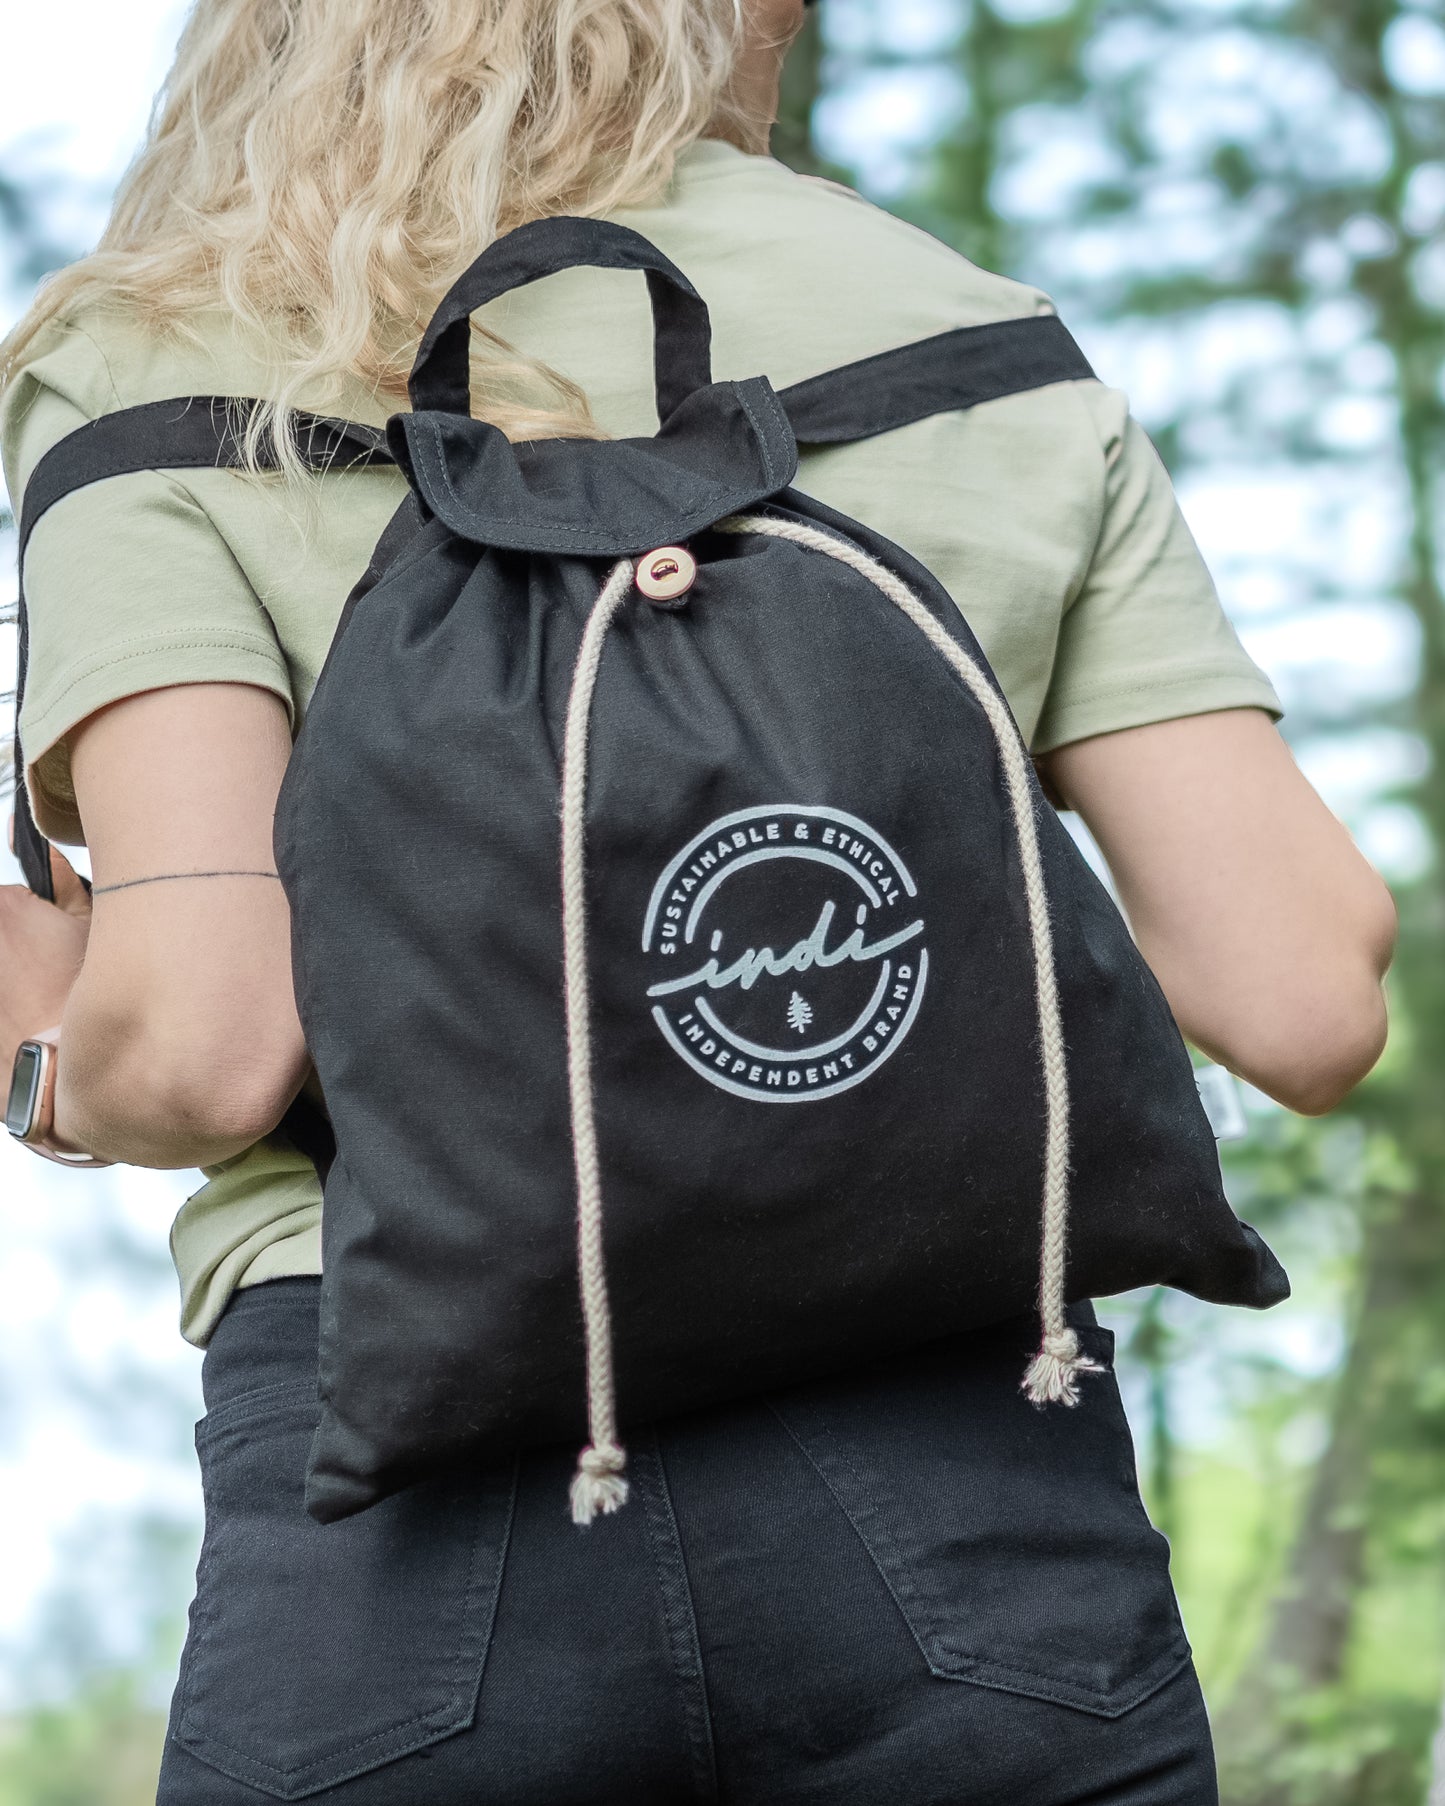 Natural Organic Backpack in Black